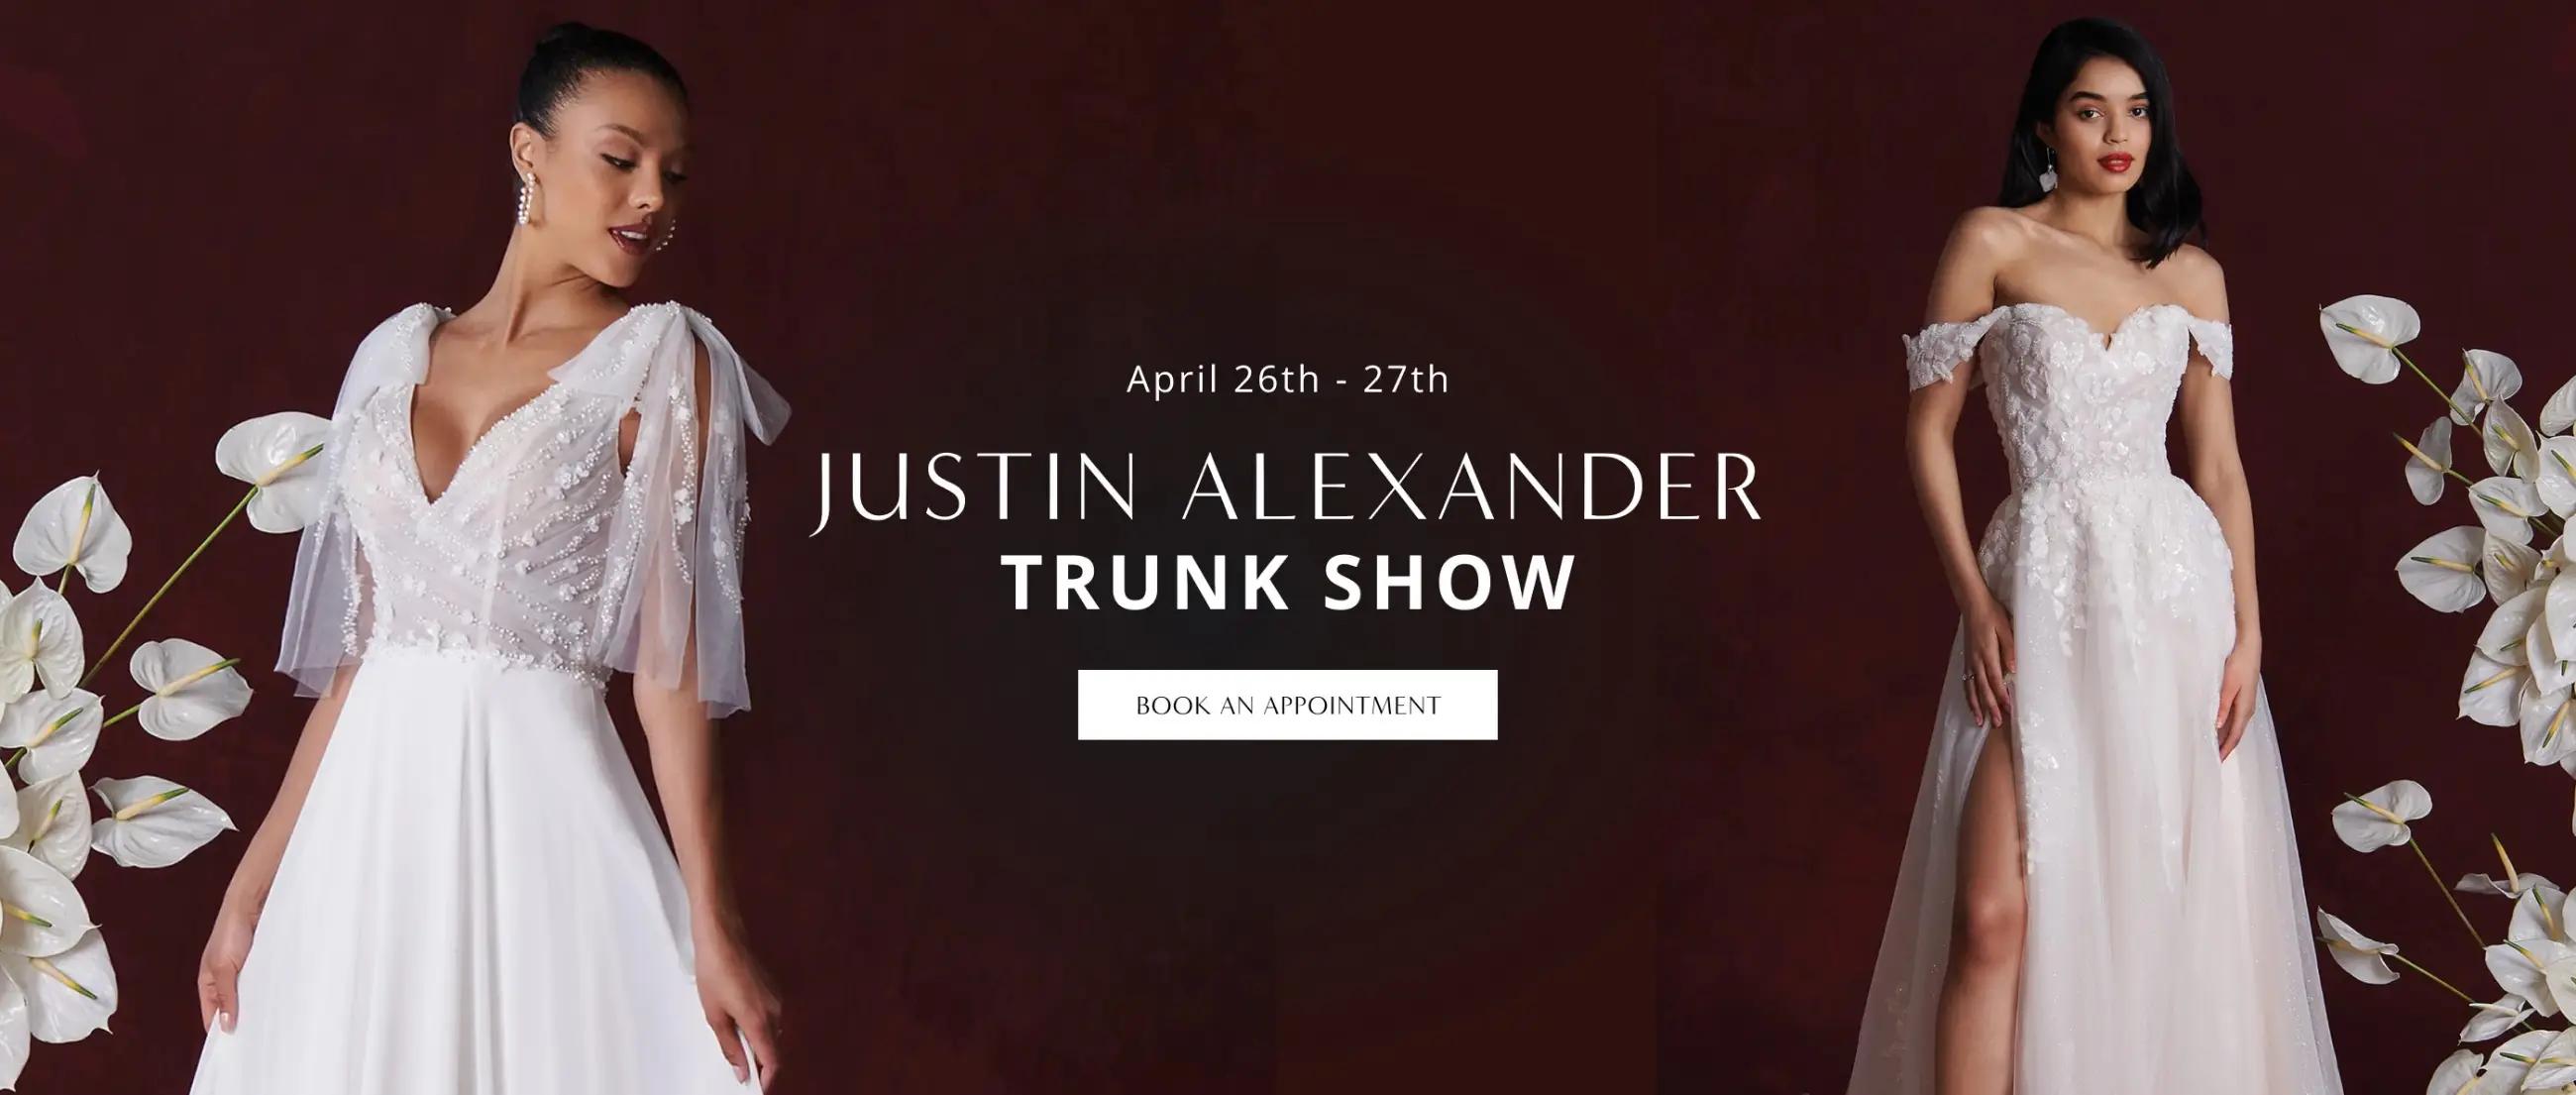 Justin Alexander Trunk Show banner